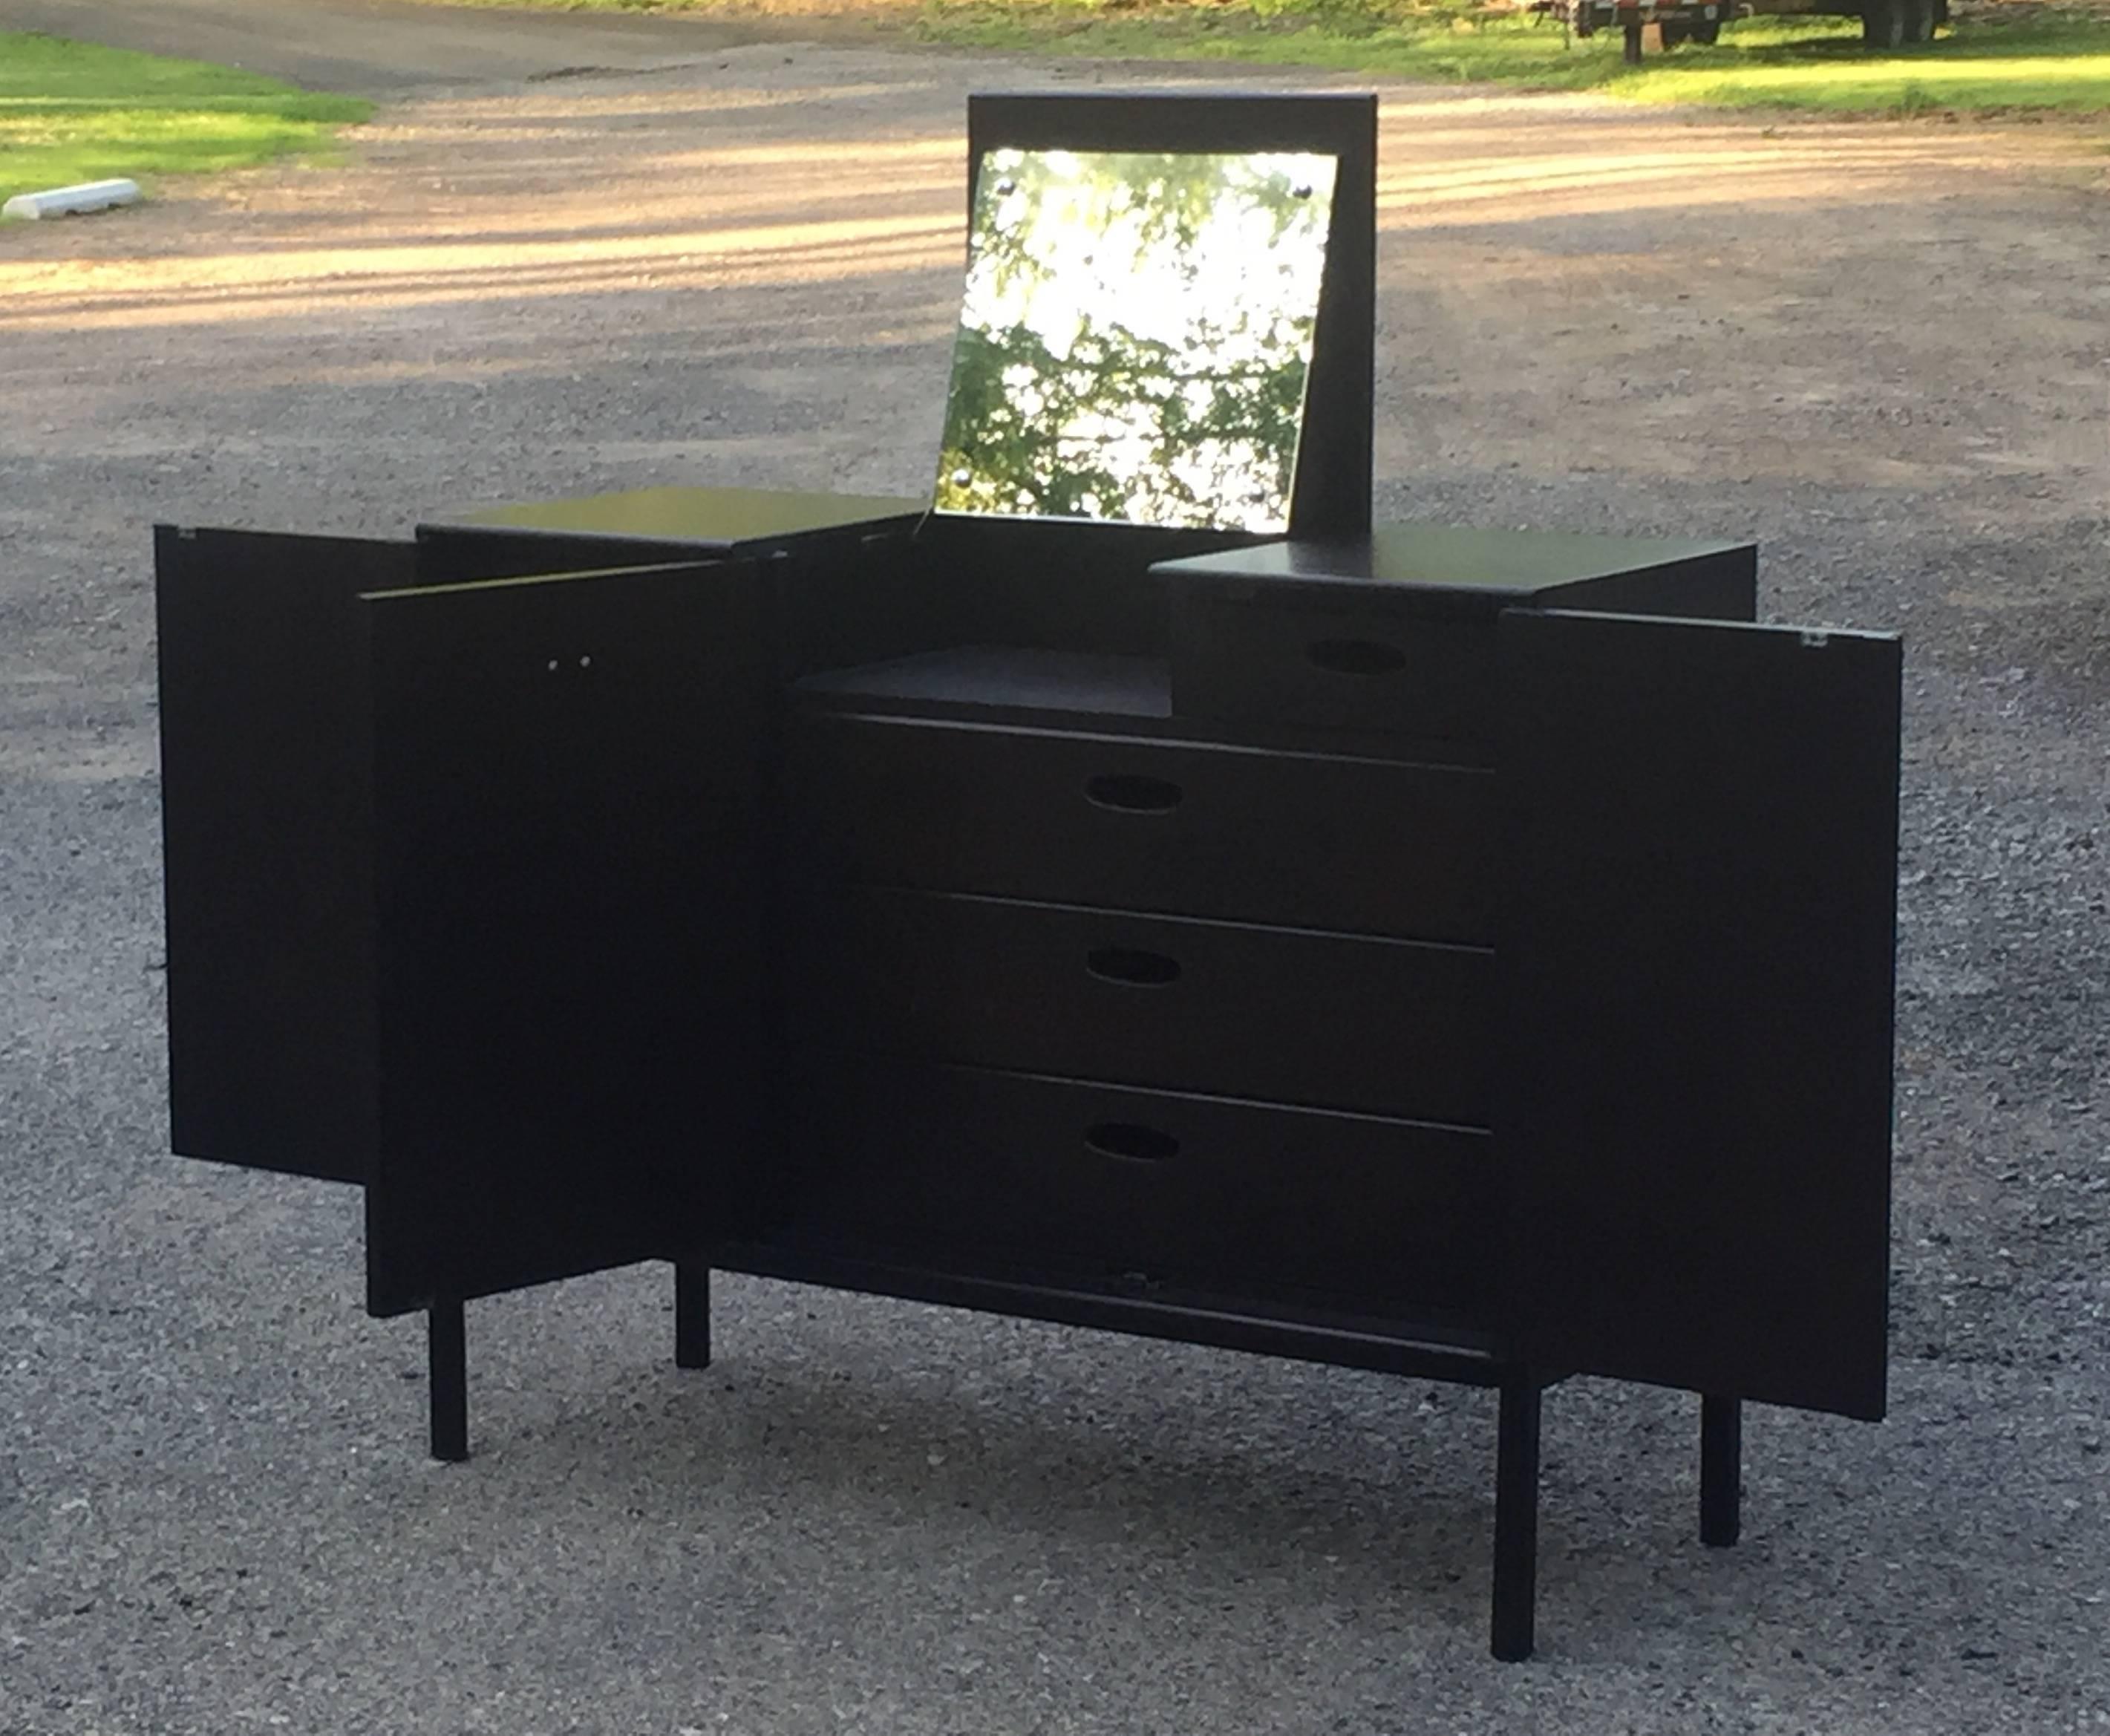 Sleek eight-drawer John Stuart dresser with vanity mirror, mahogany with a dark almost black finish.